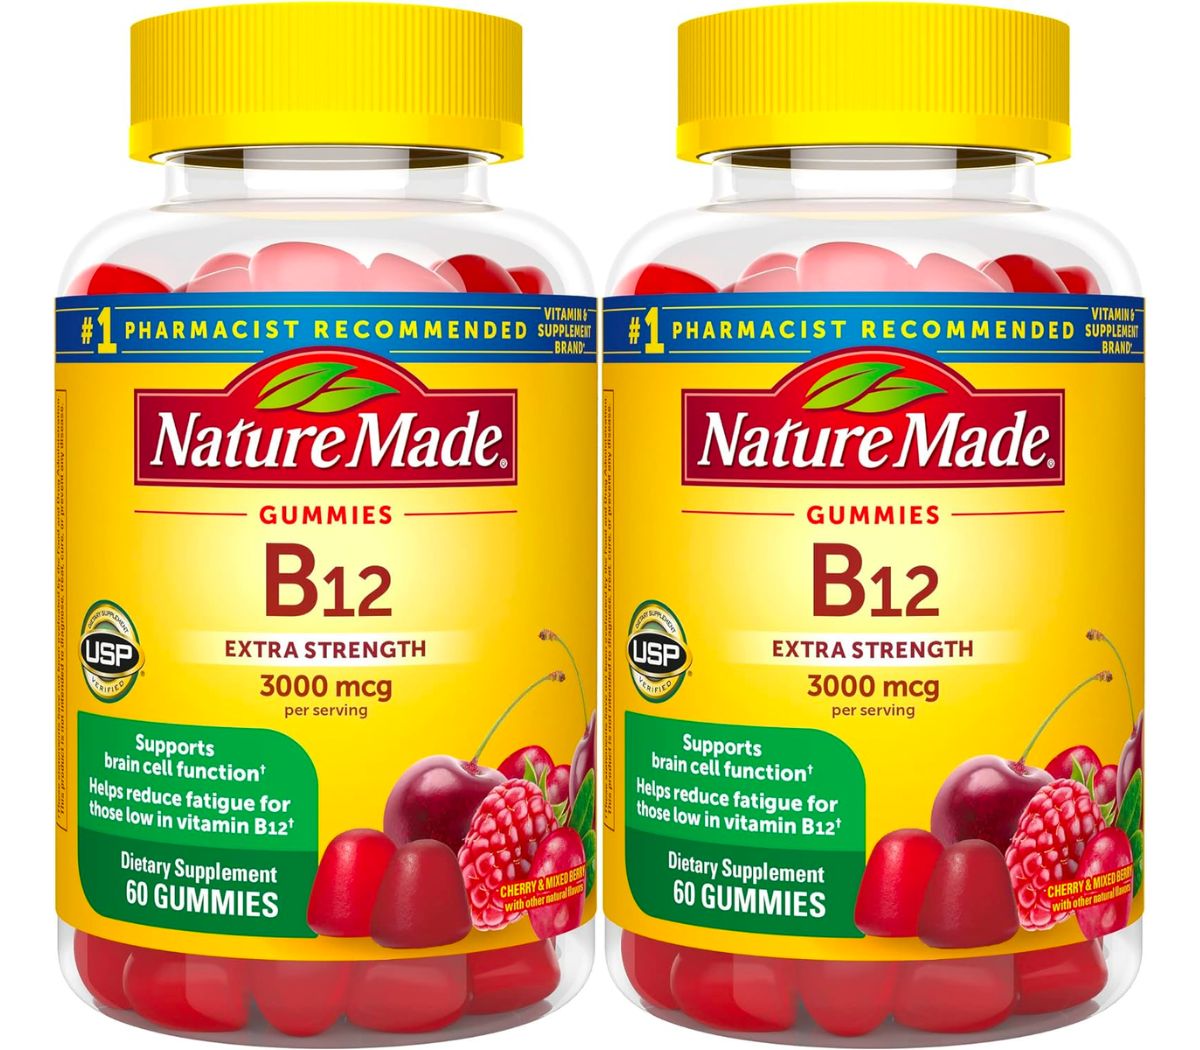 Nature Made Extra Strength Vitamin B12 Gummies 3000mcg per serving stock images 